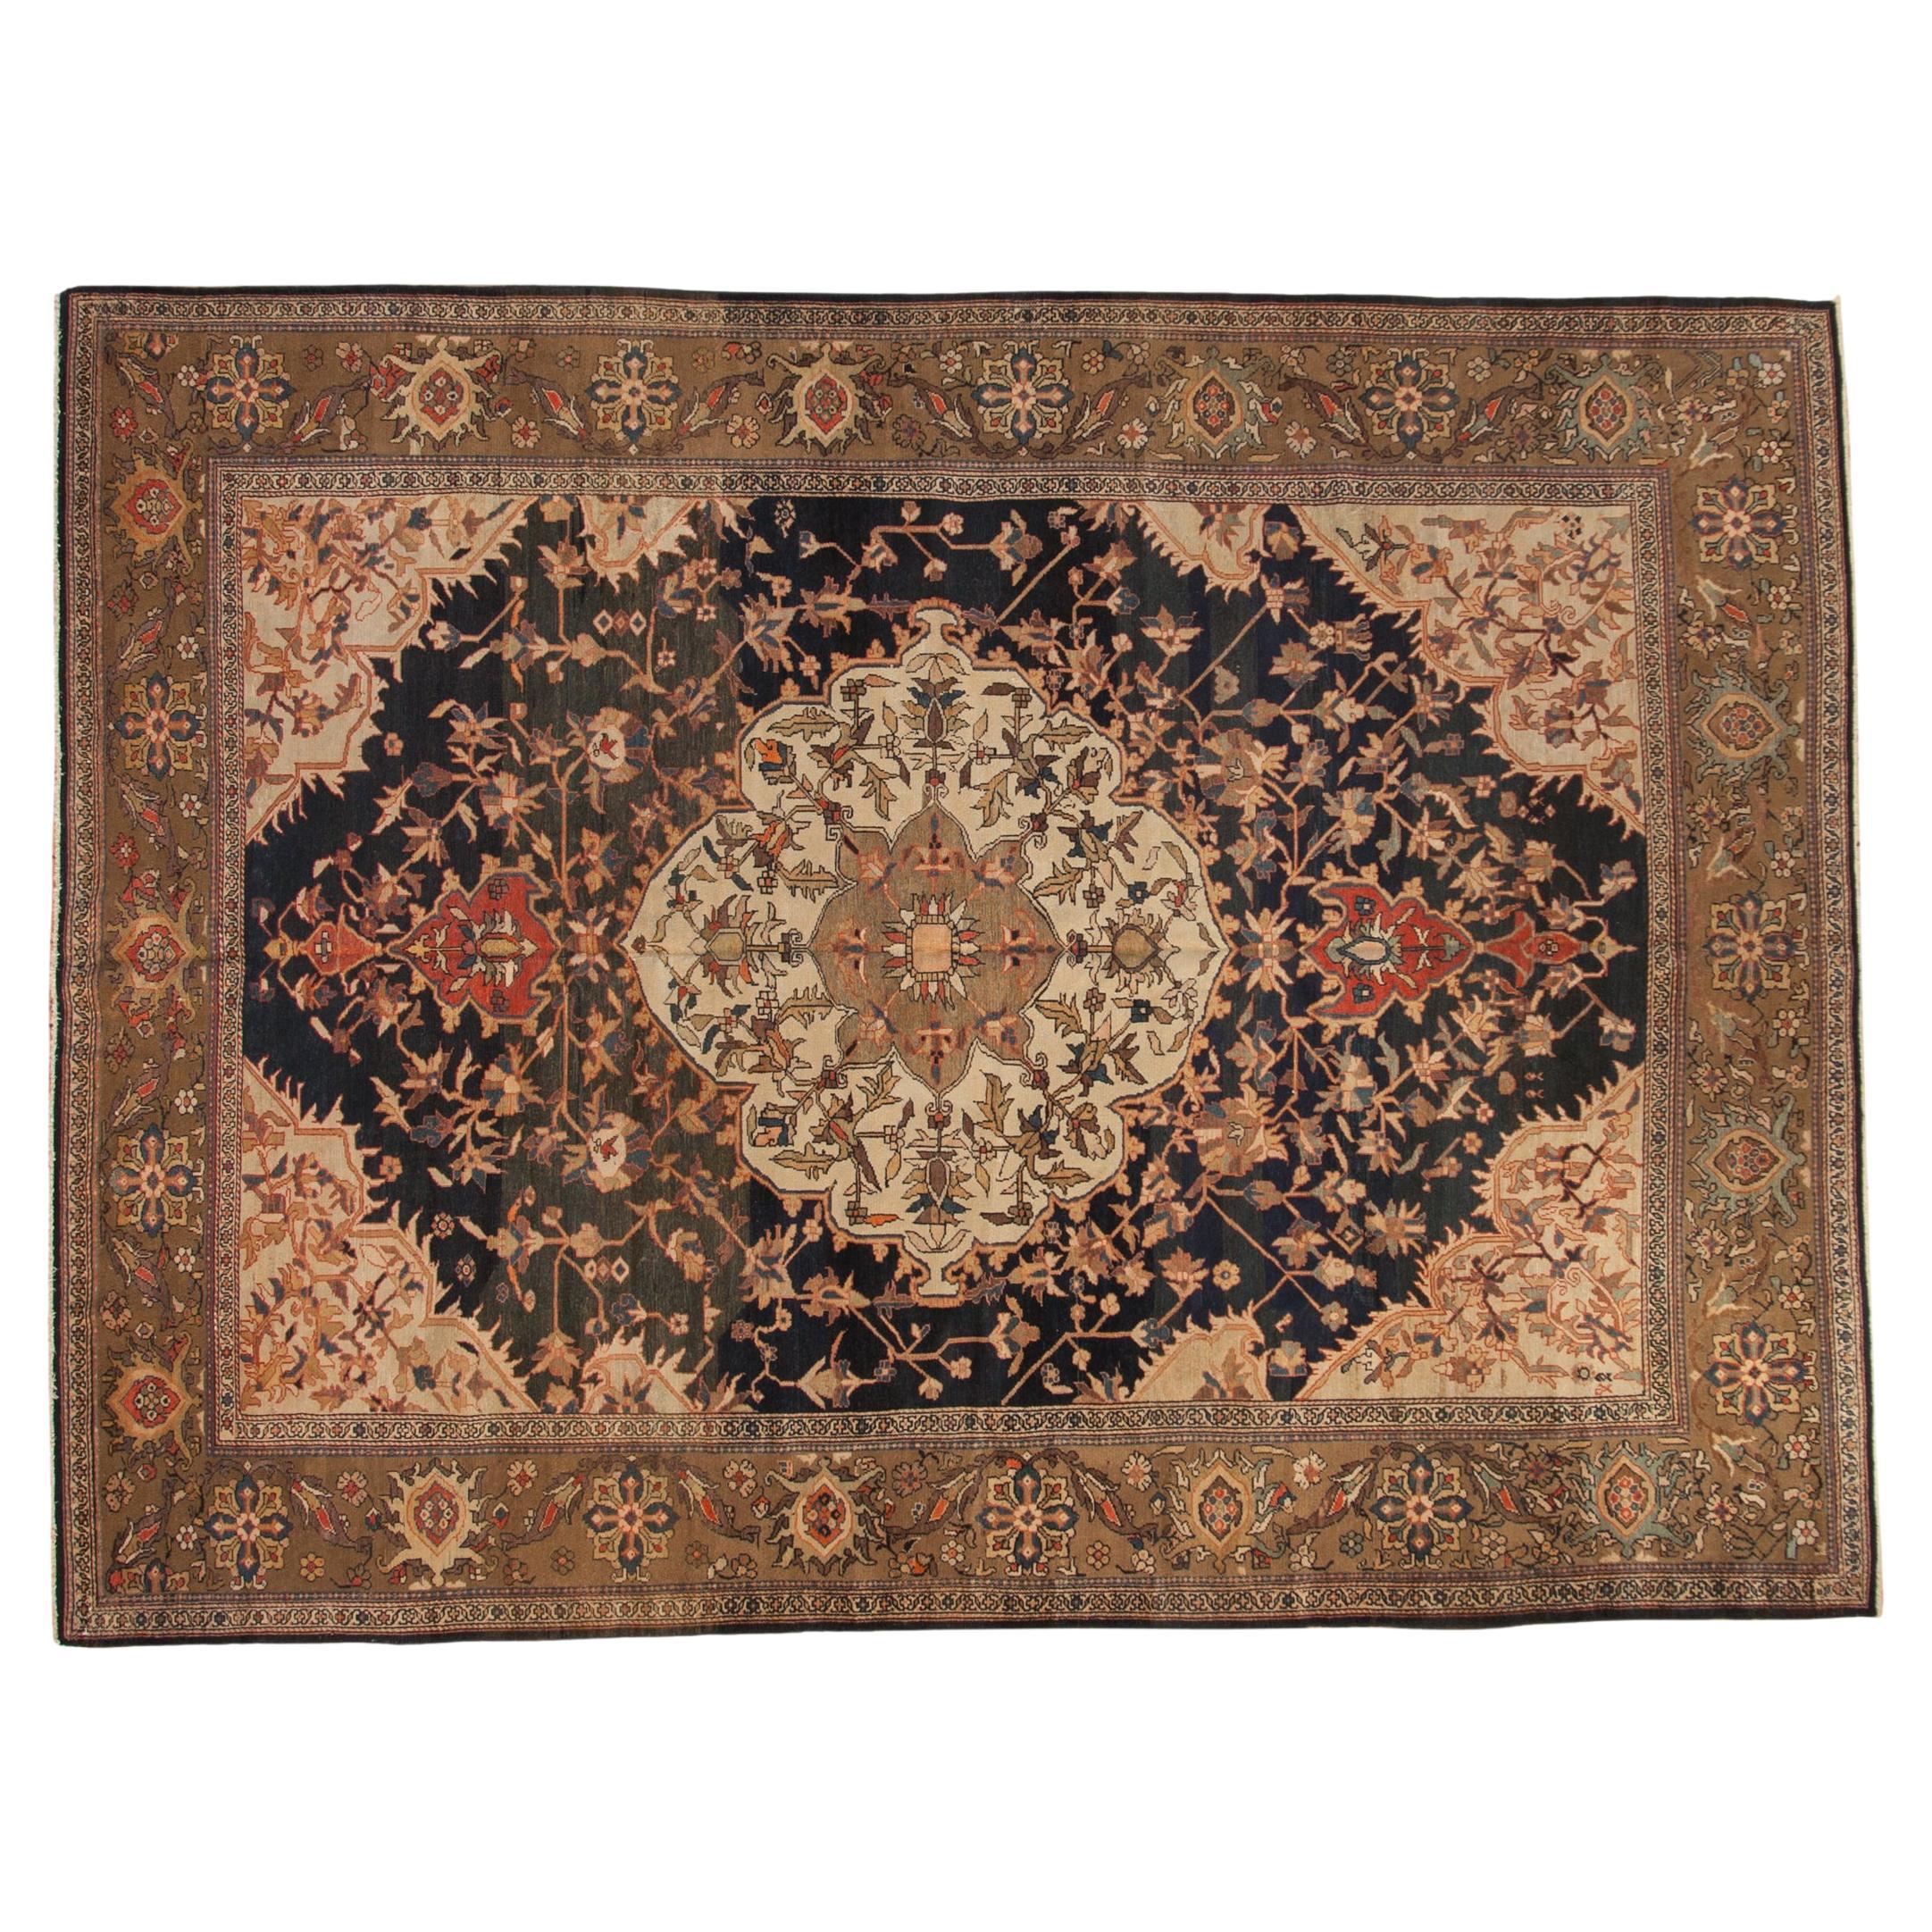 Antique Fine Malayer Carpet